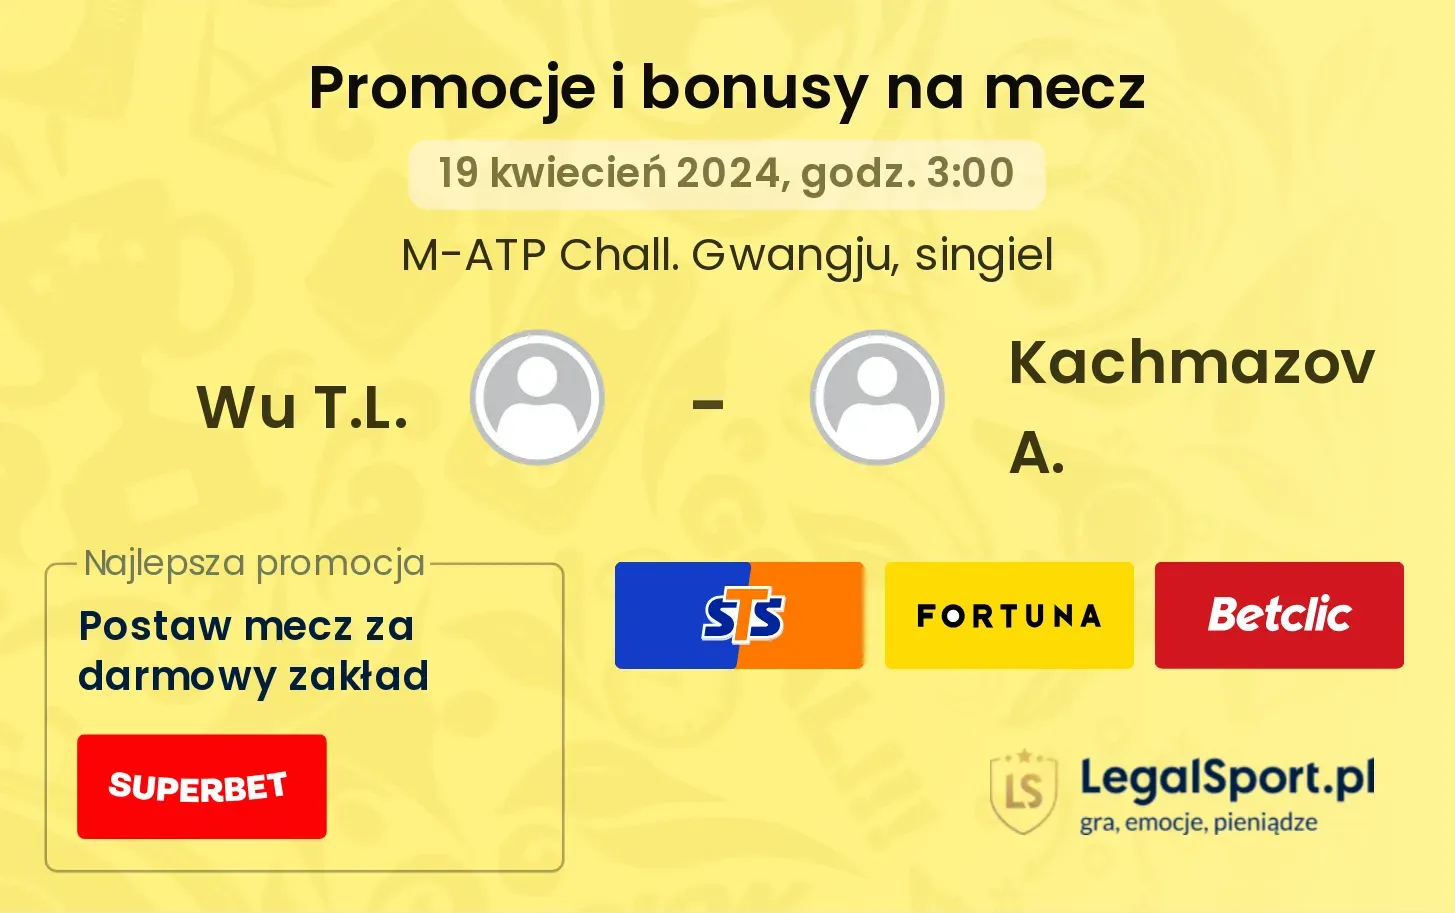 Wu T.L. - Kachmazov A. promocje bonusy na mecz